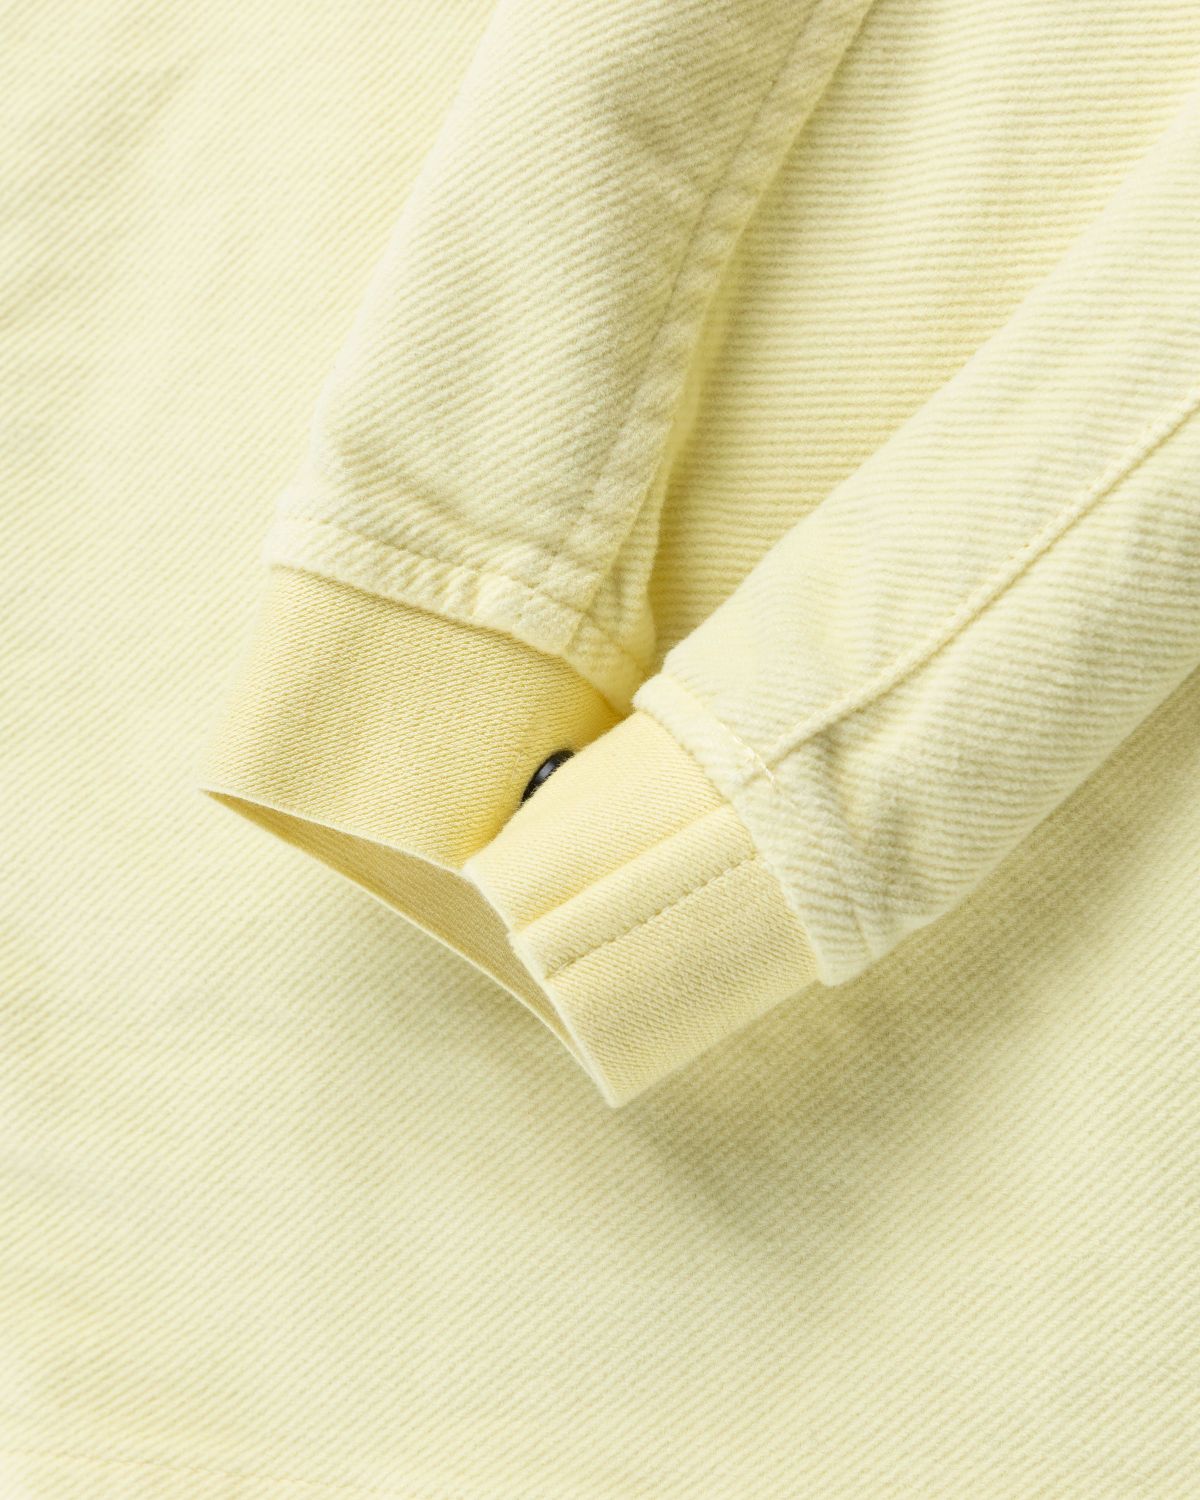 Stone Island – Garment-Dyed Cotton Overshirt Butter - Overshirt - Beige - Image 6